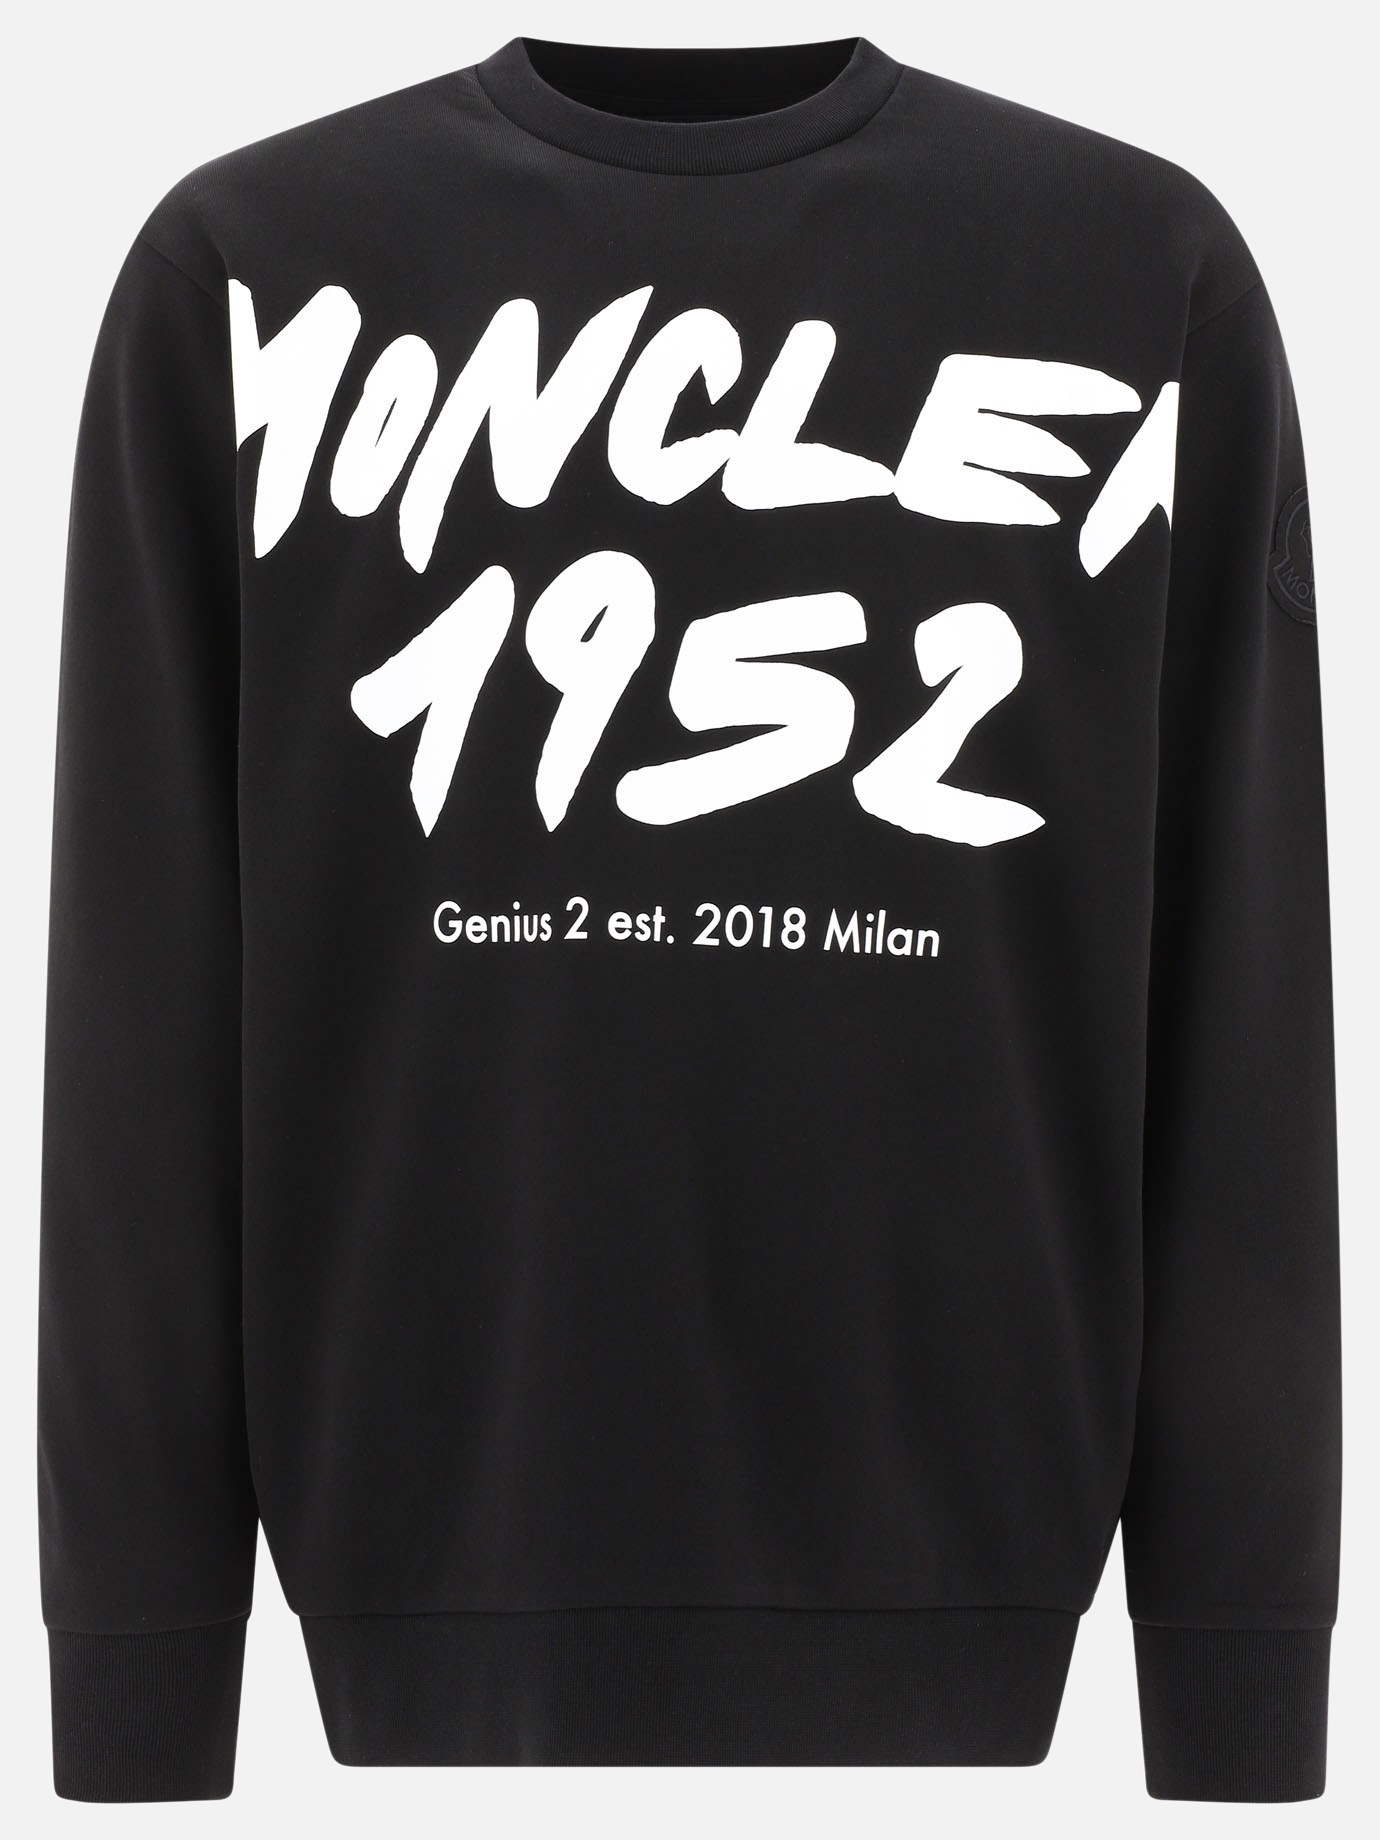  1952  sweatshirt by Moncler Genius